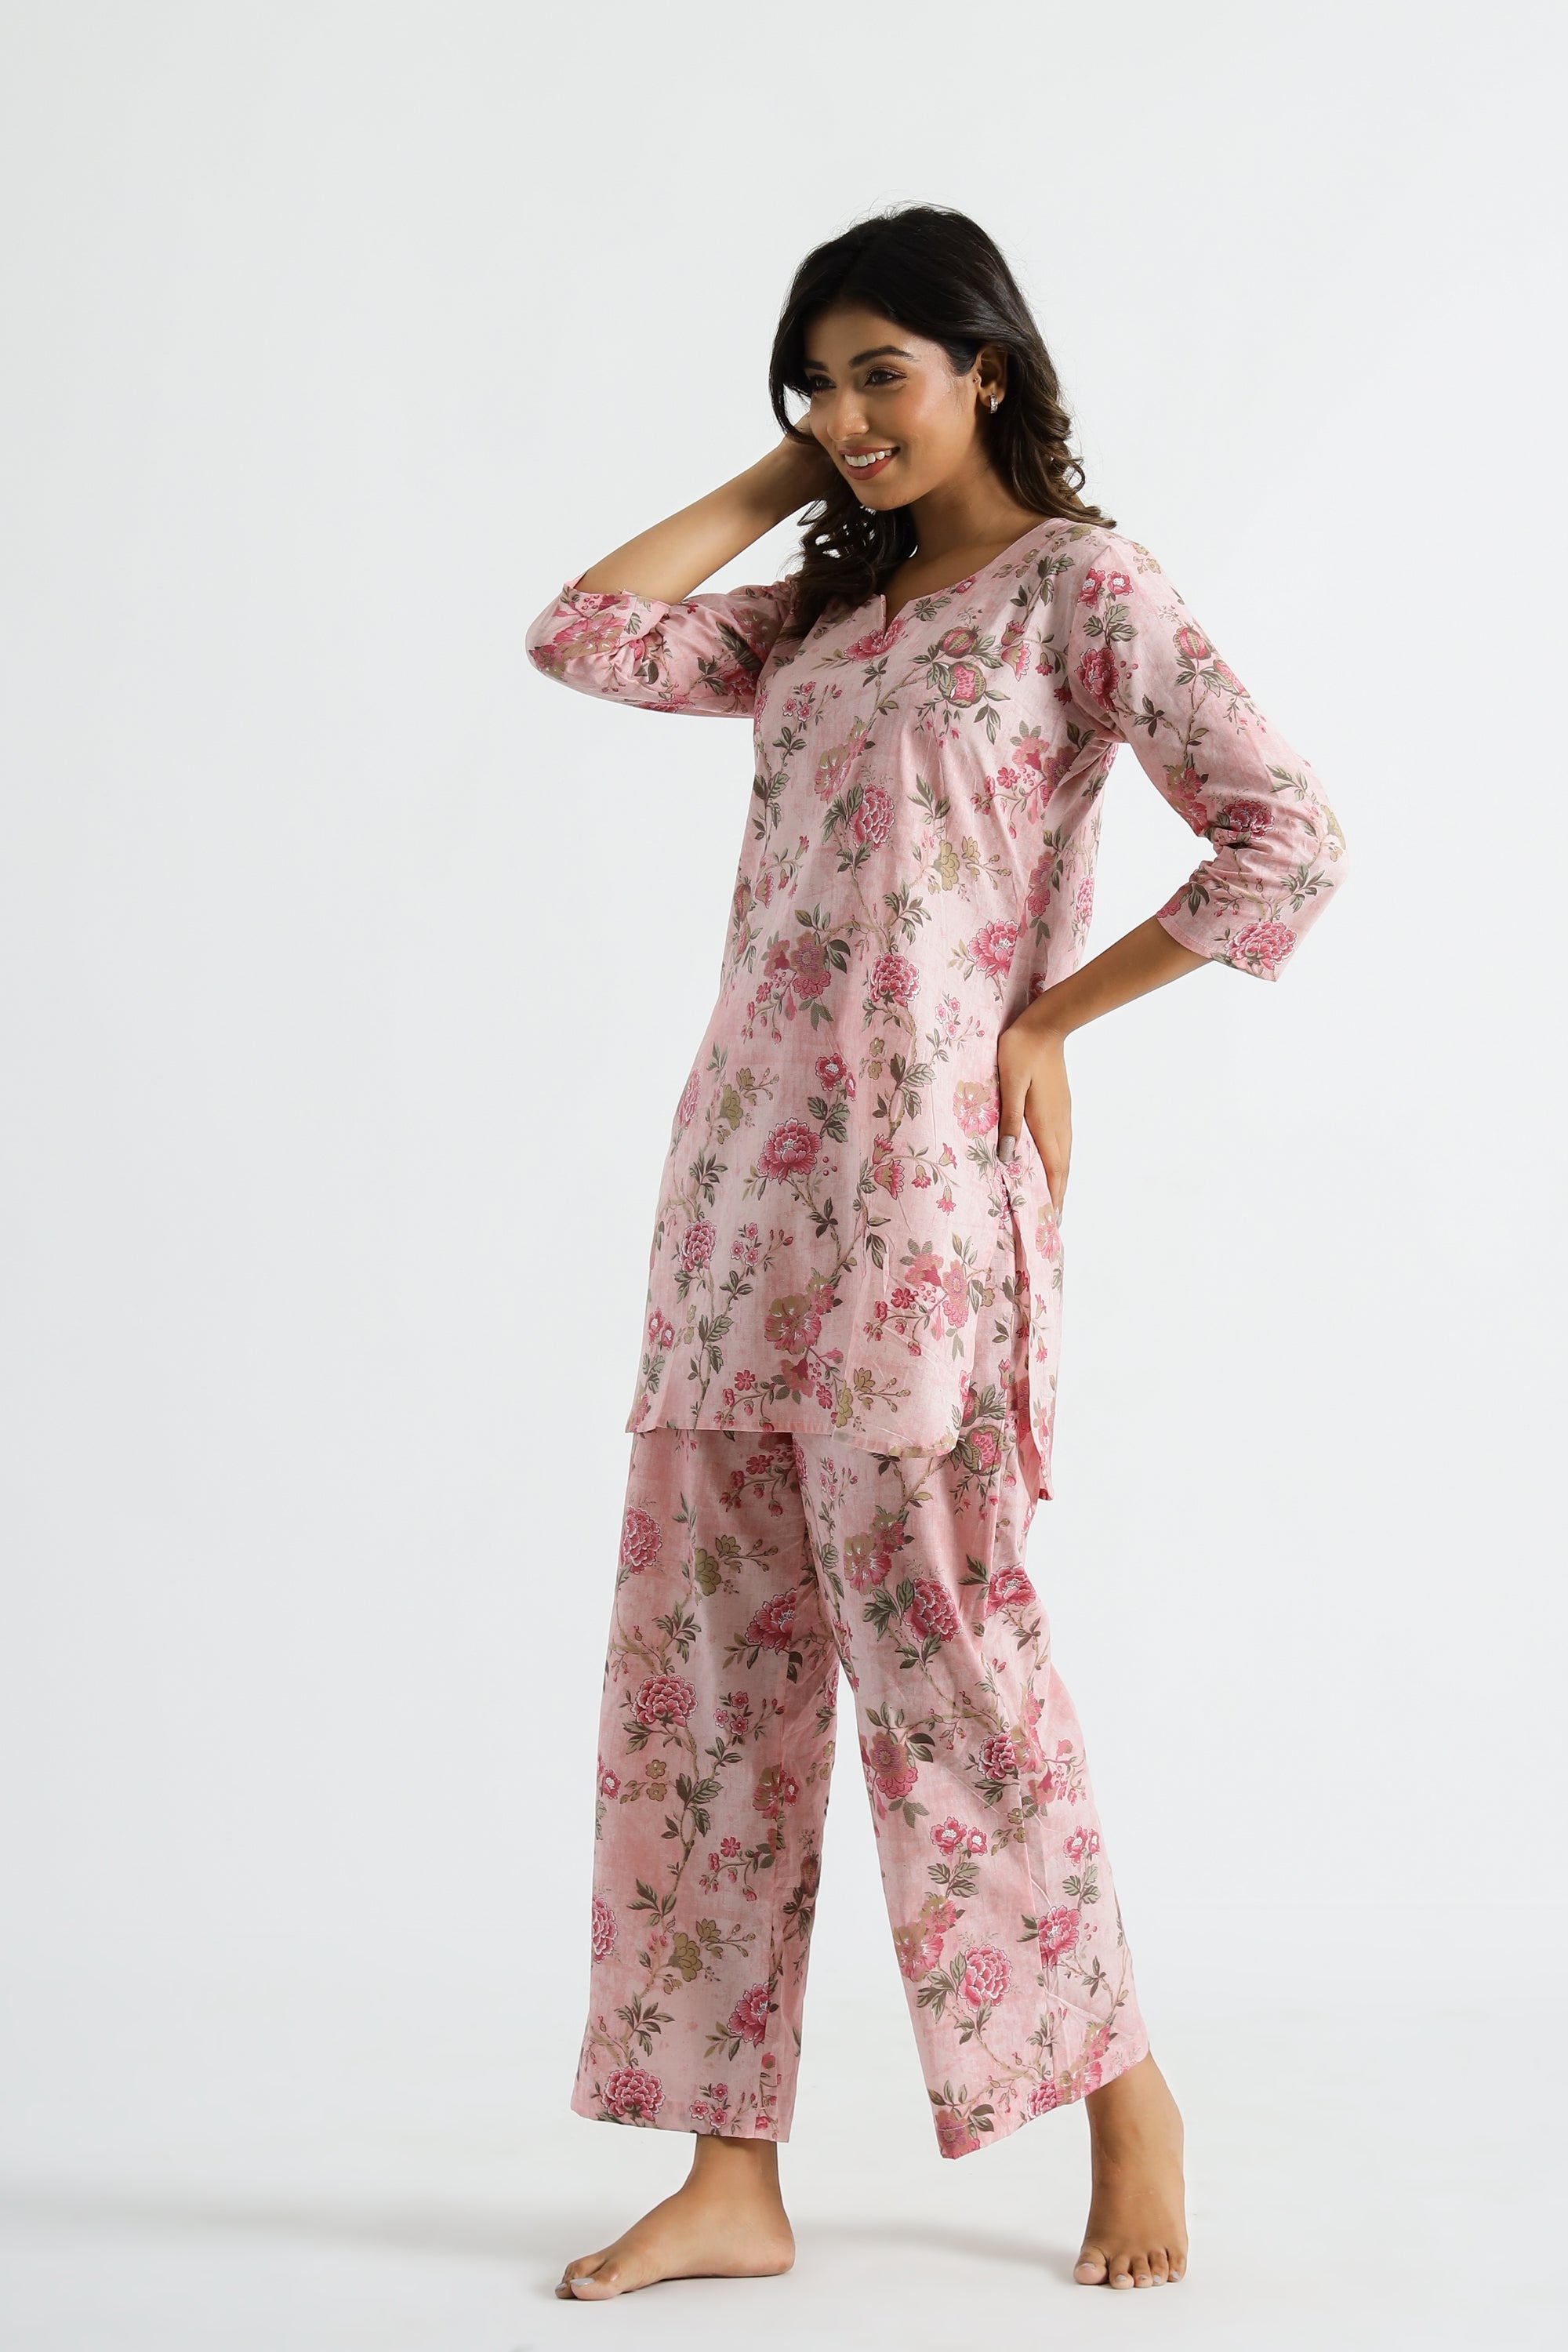 Printed Hosiery Premium T-Shirt Pajama Full Night Suit, Mix at Rs 300/piece  in Mumbai